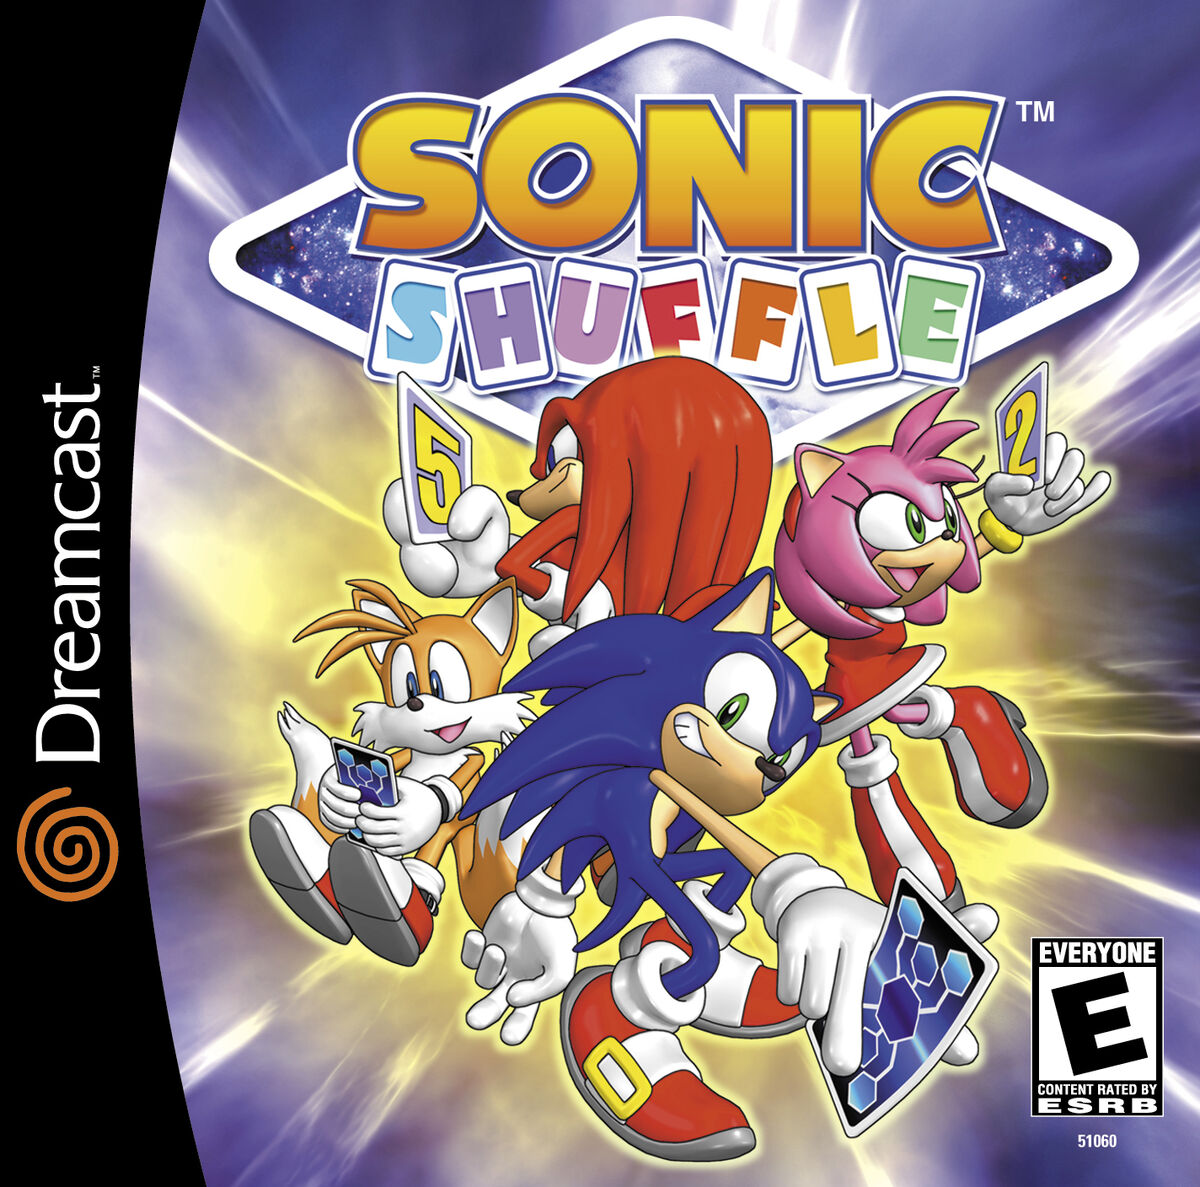 Sonic Shuffle | Idea sonic games Wiki | Fandom